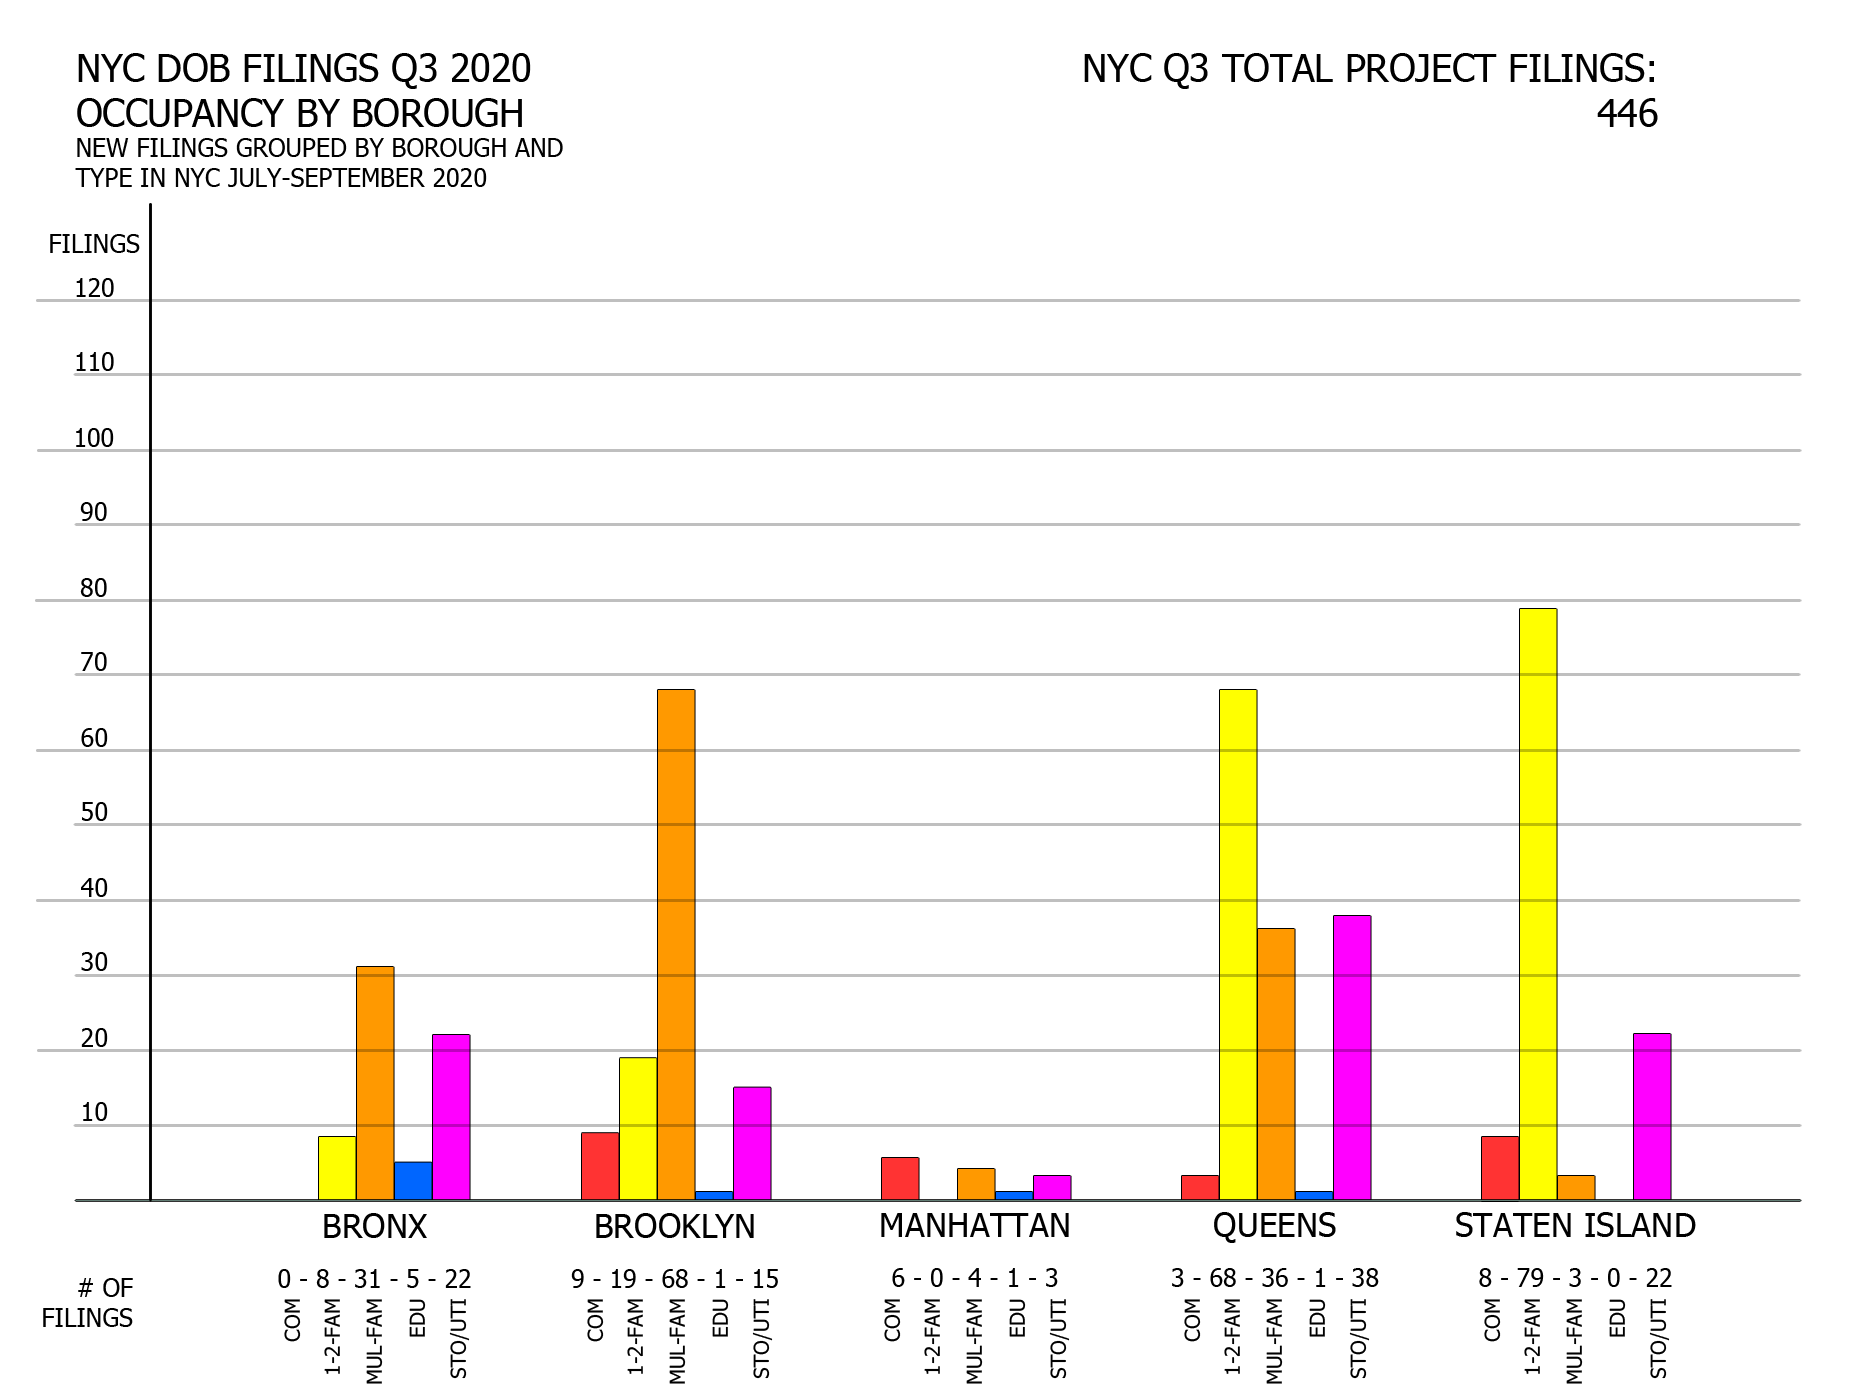 NYC DOB filings in Q3 2020 by borough and occupancy type. Credit: Vitali Ogorodnikov